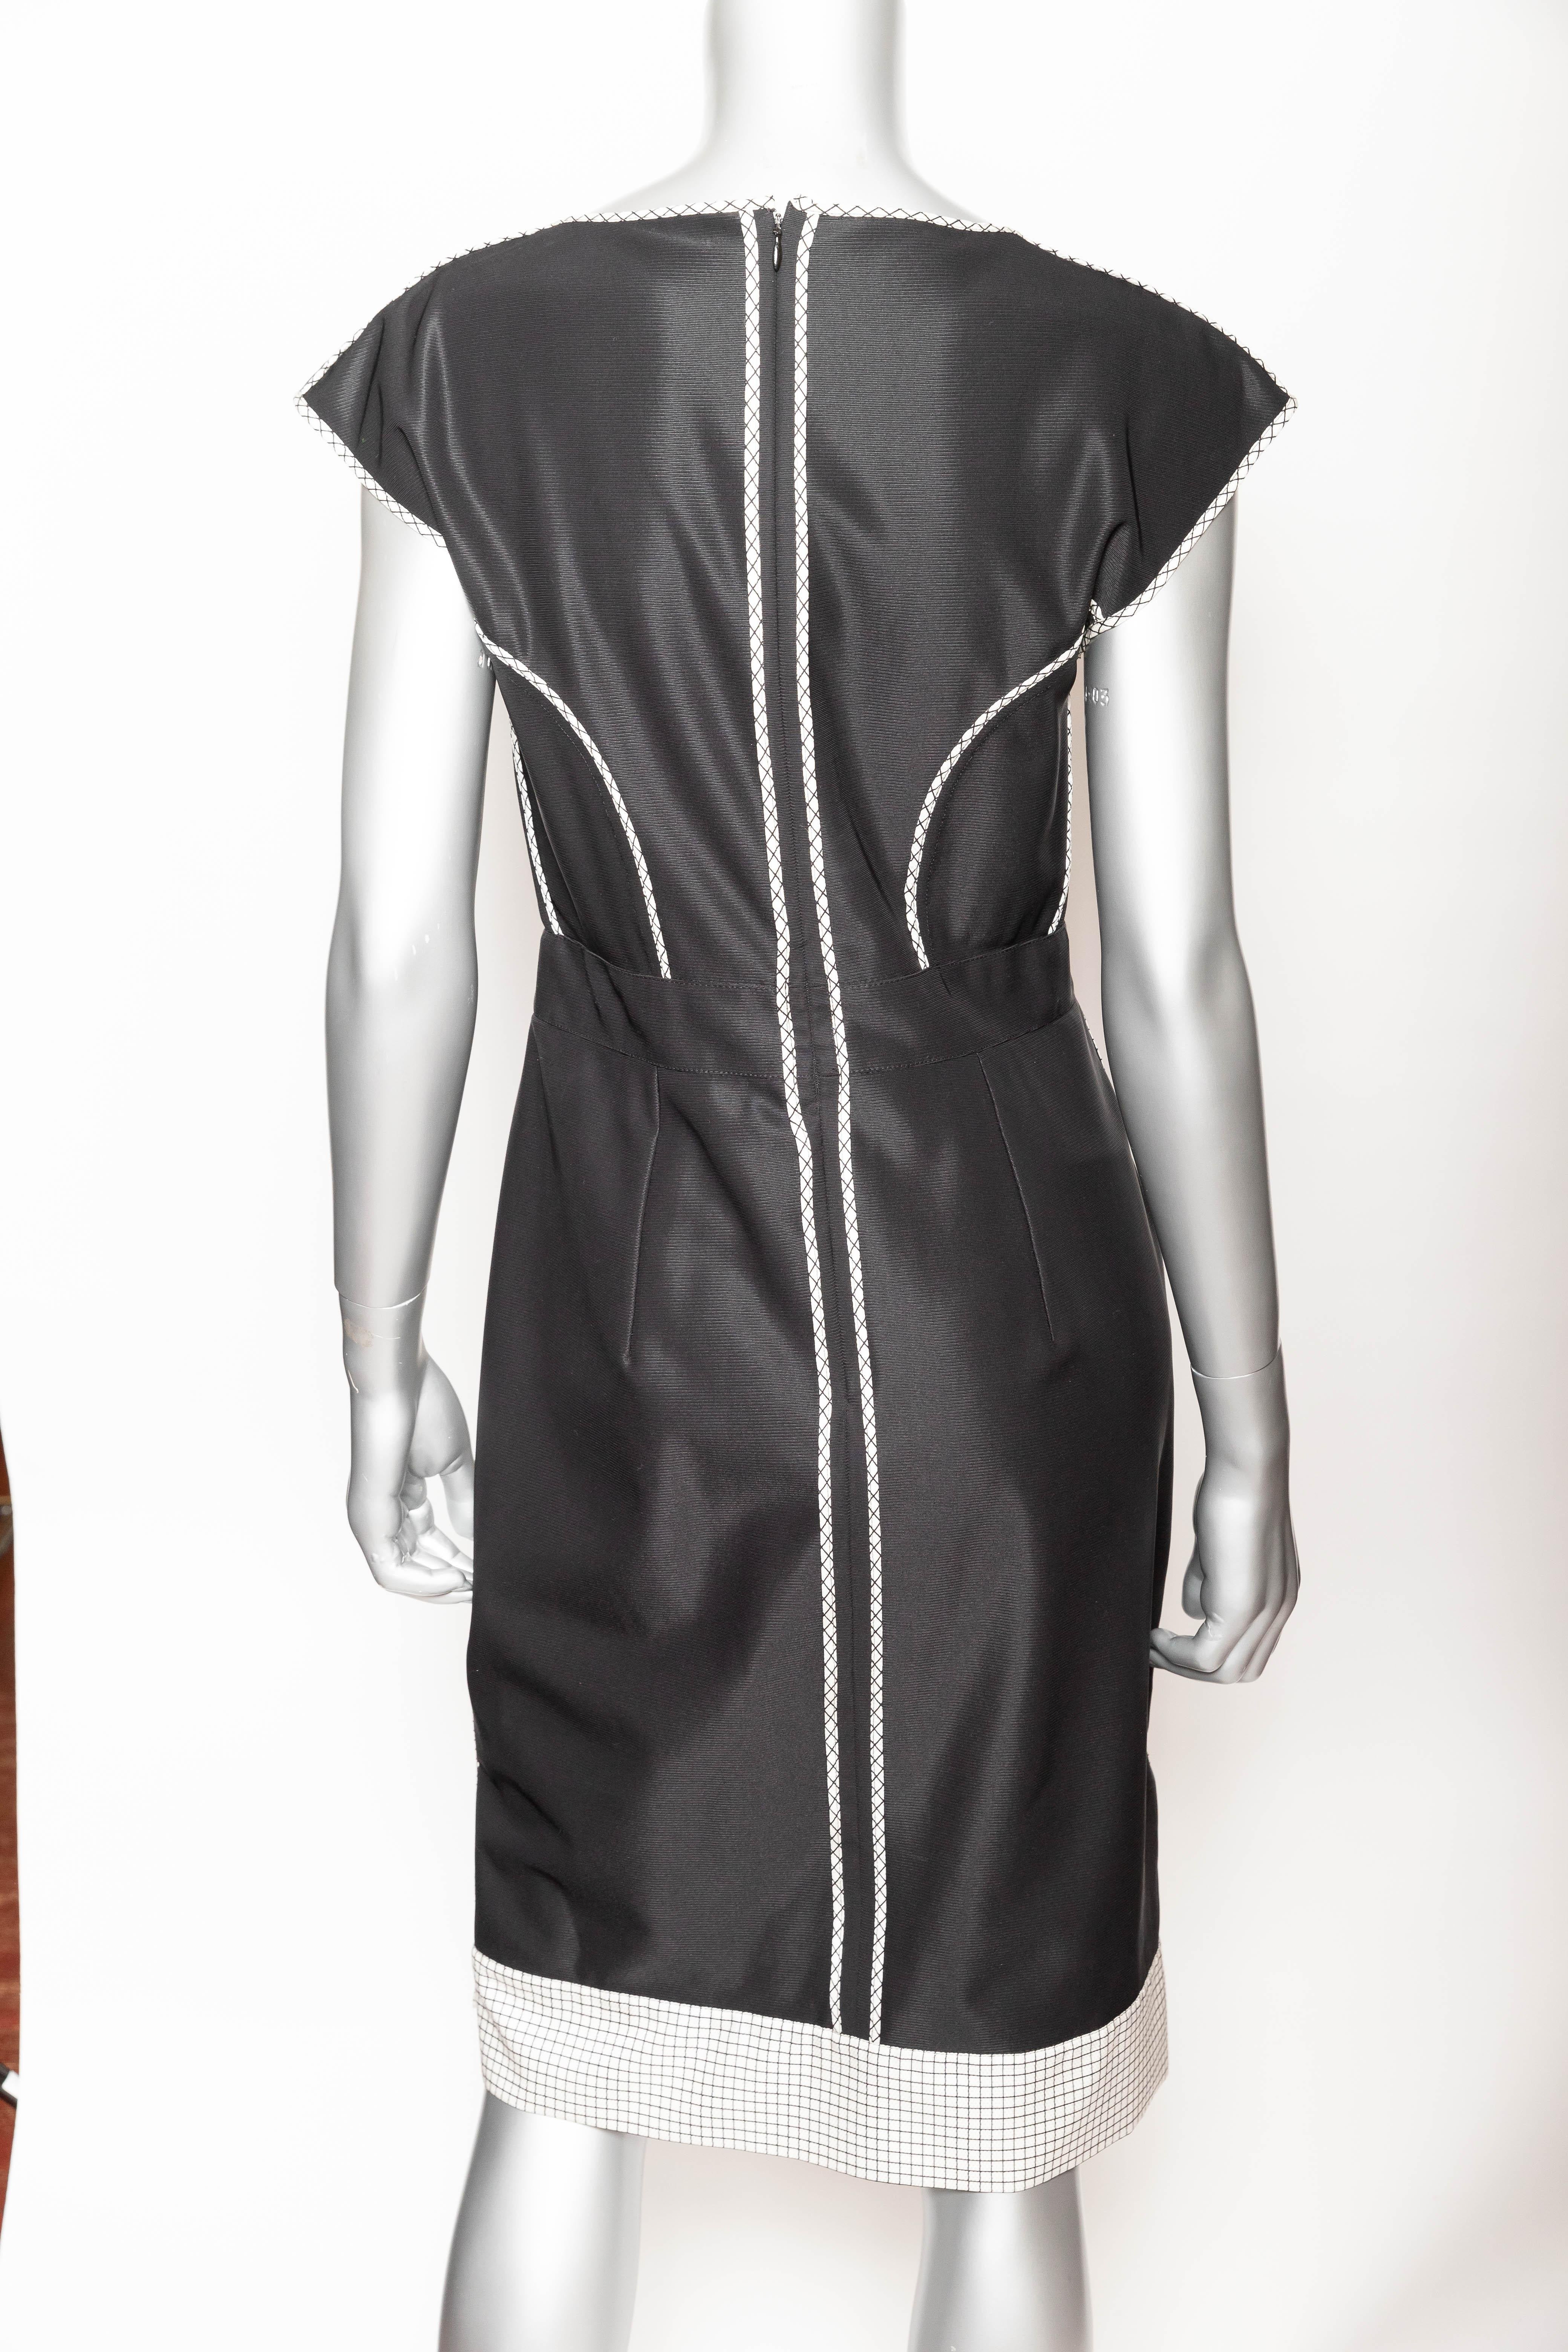 Fendi Cap Sleeve Dress - 42 / Medium For Sale 1